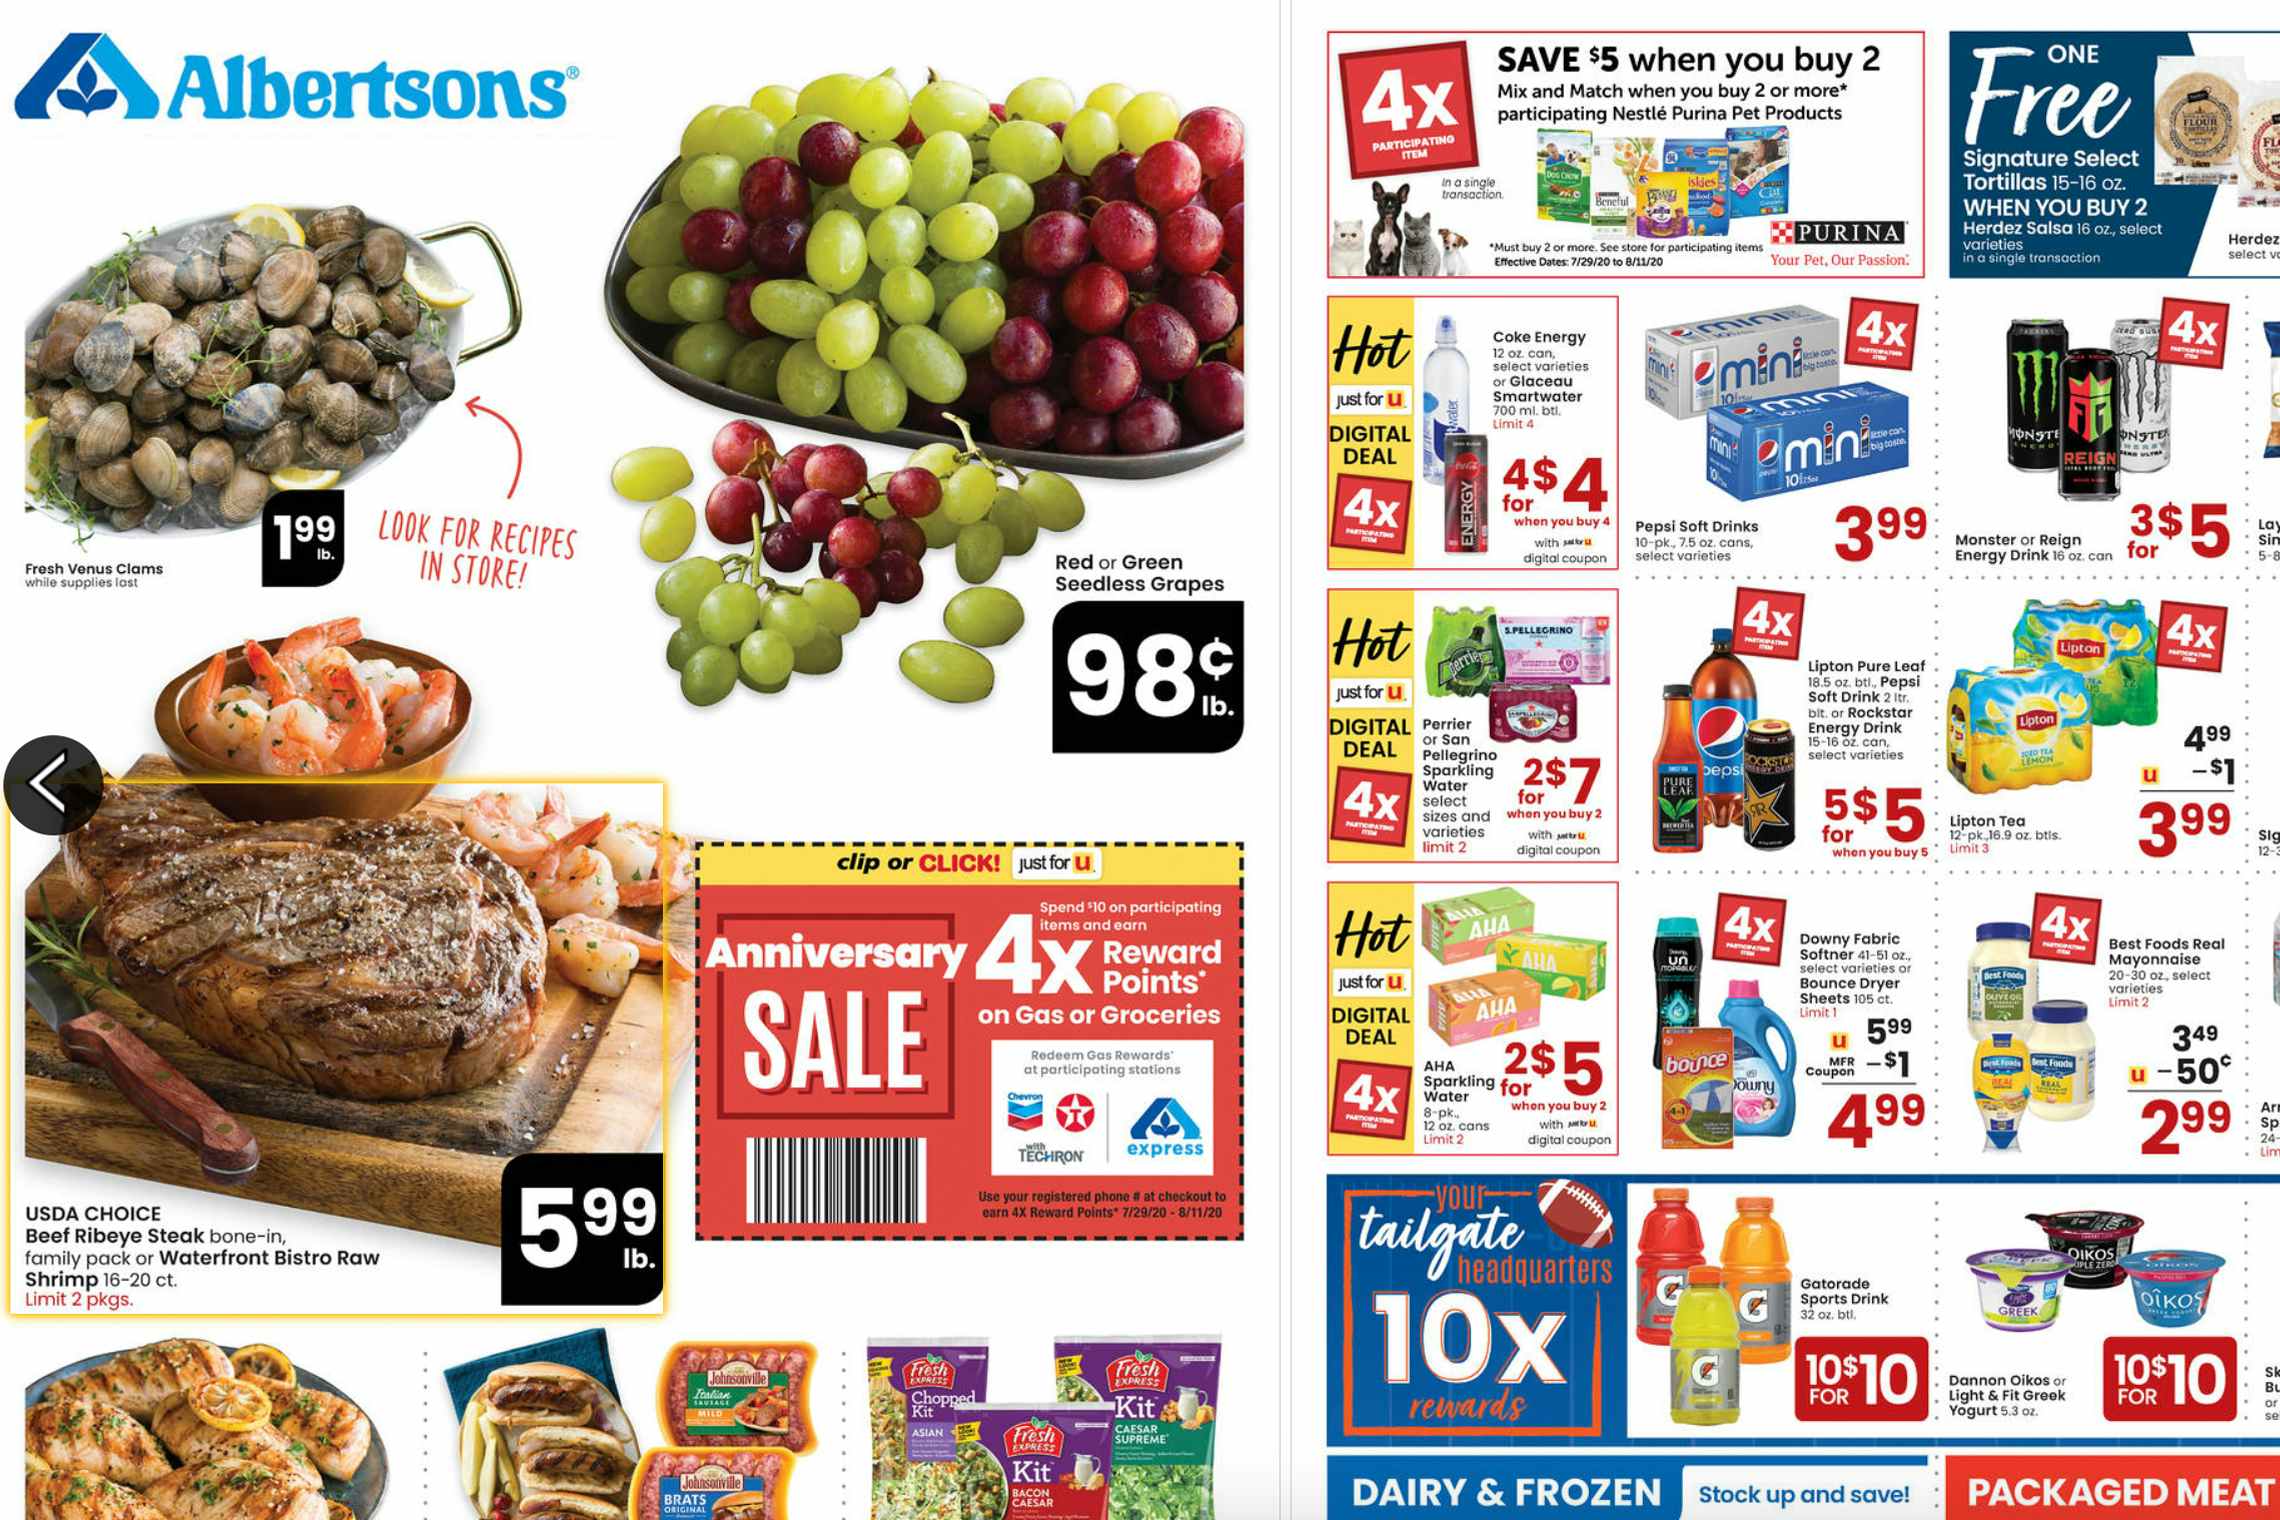 Albertsons weekly grocery circular.